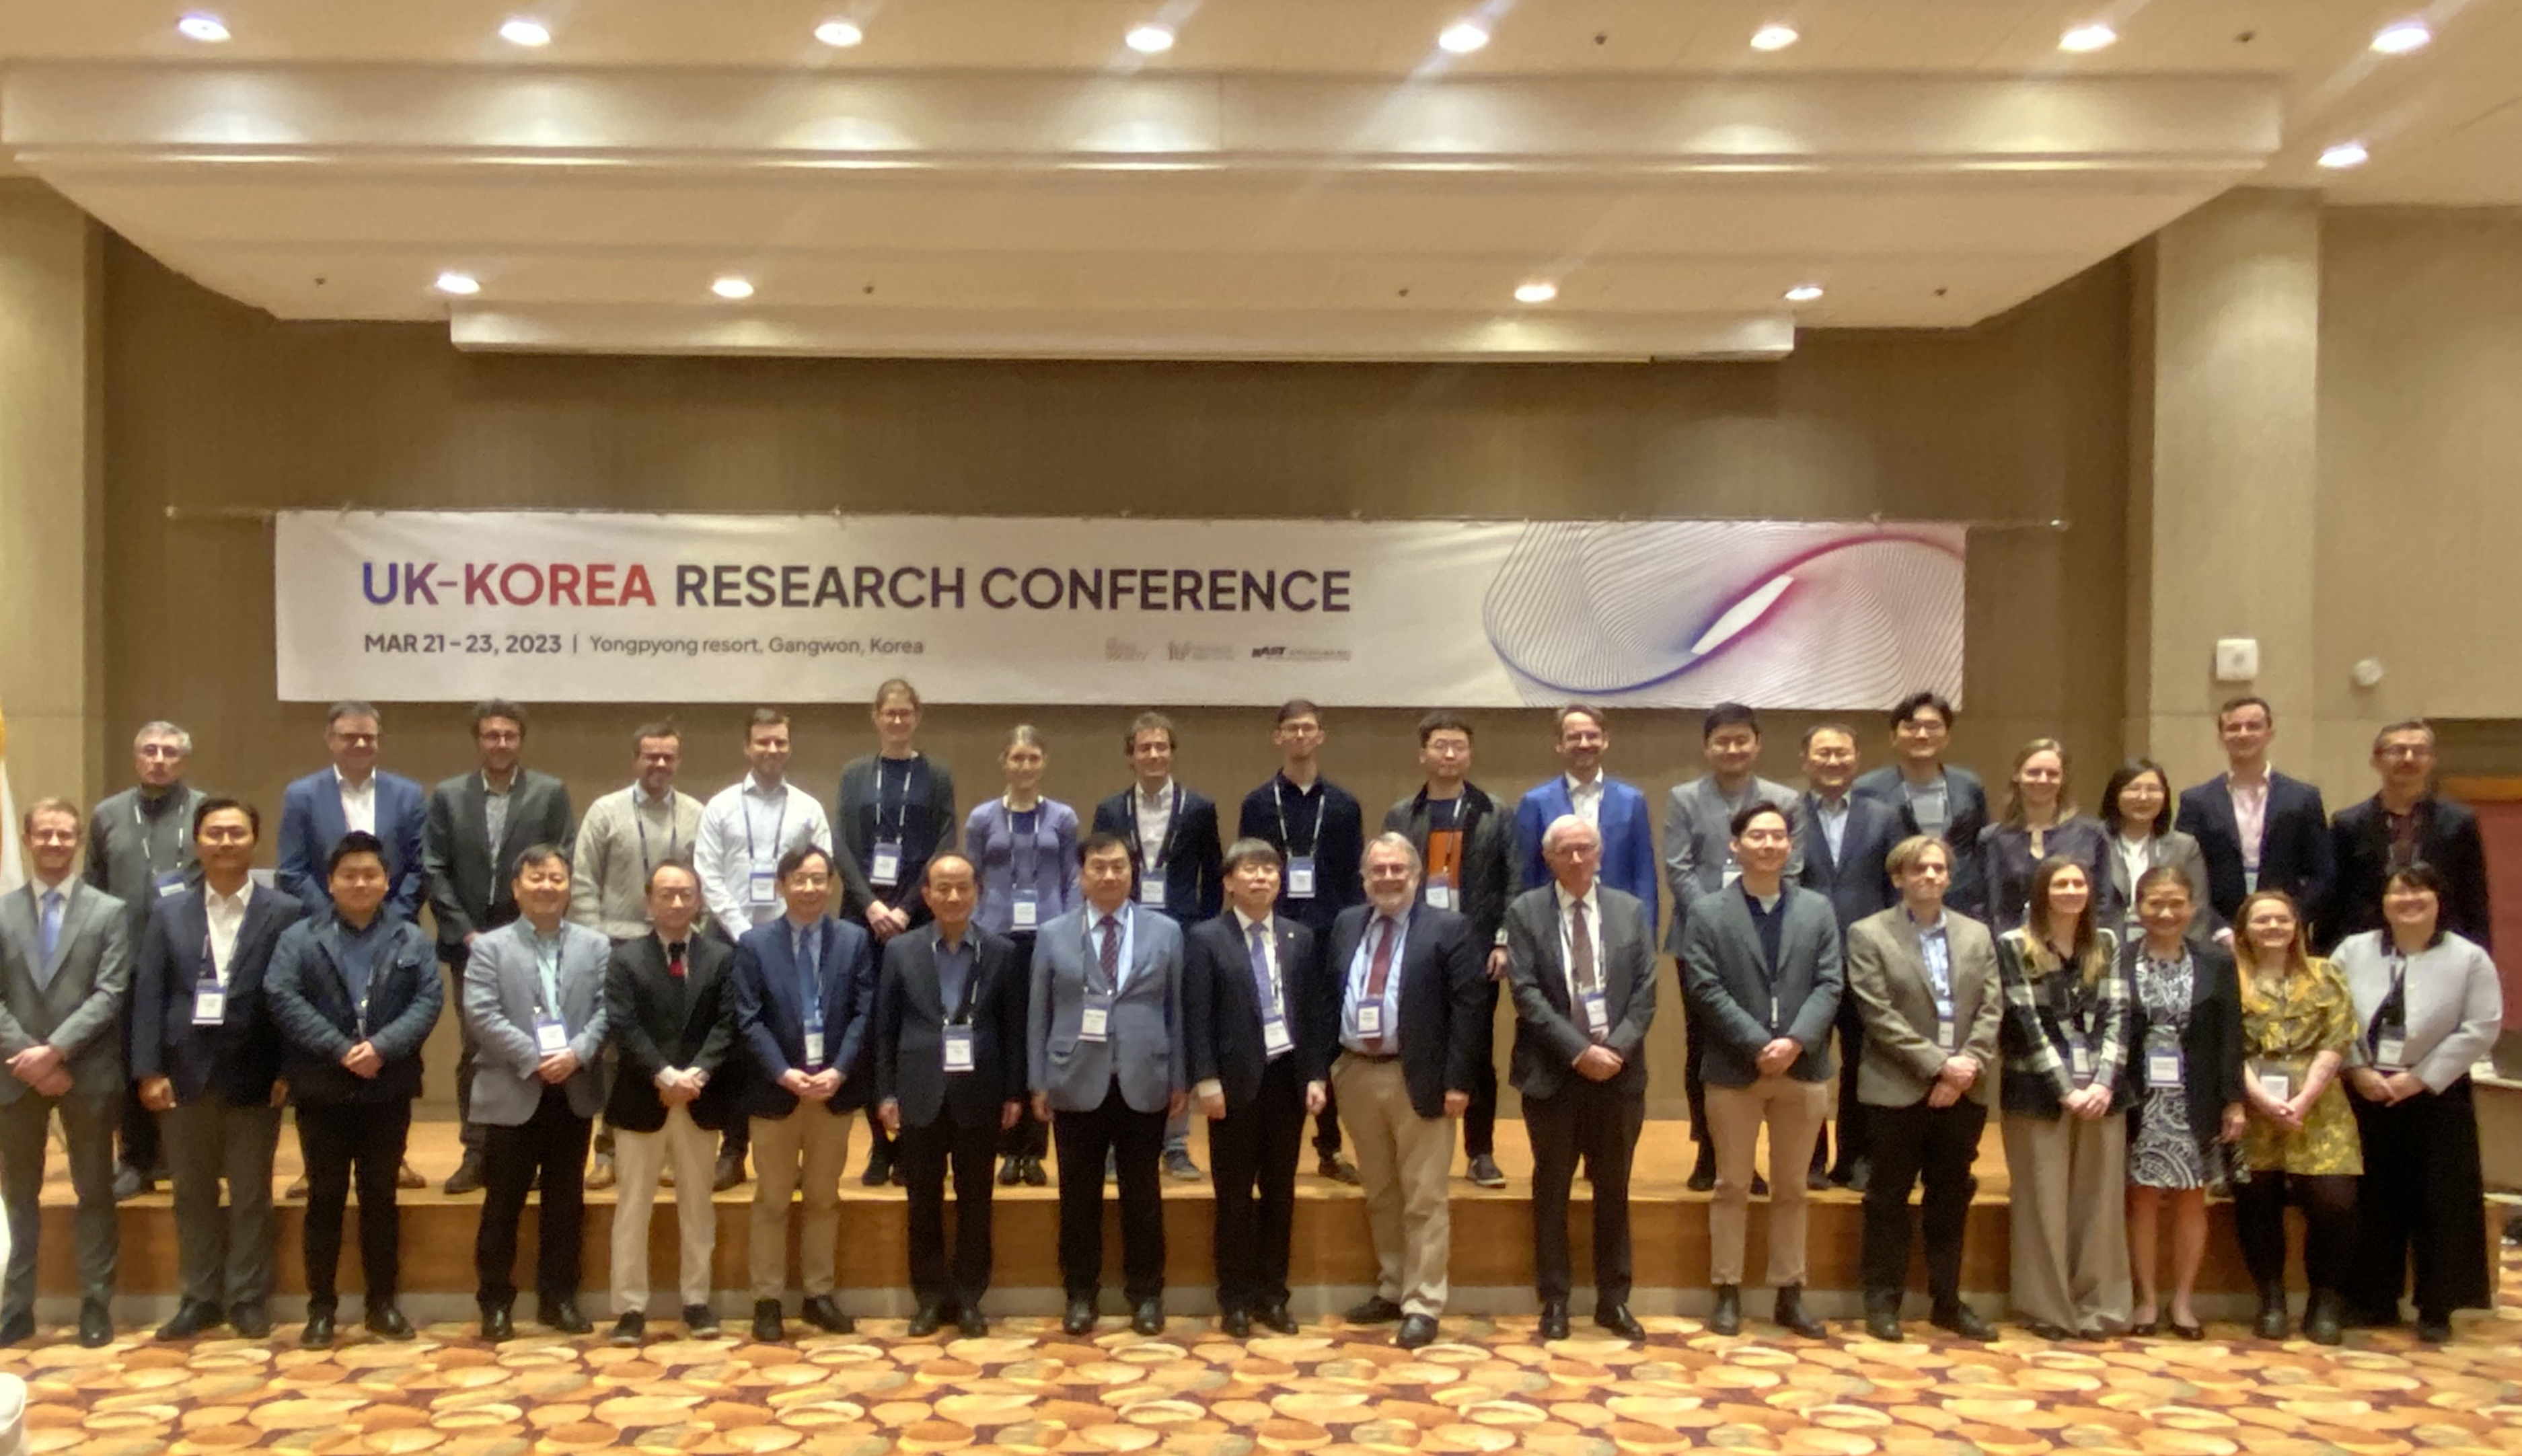 UK Korea Research Conference held in Pyeongchang